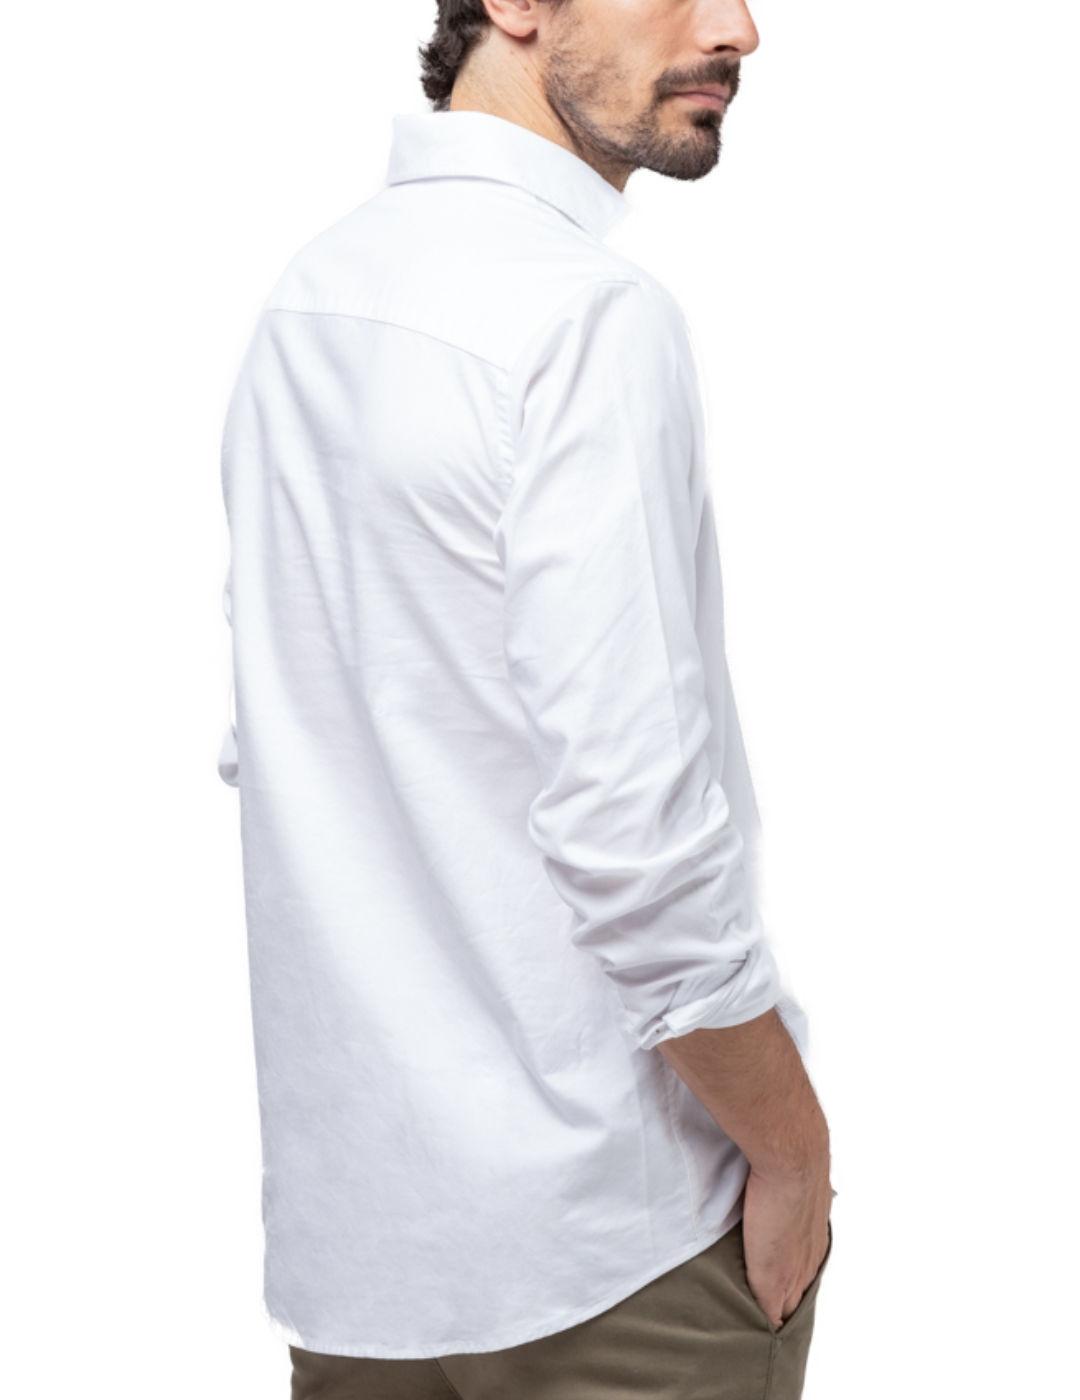 Camisa polera Scotta color blanco para hombre -b